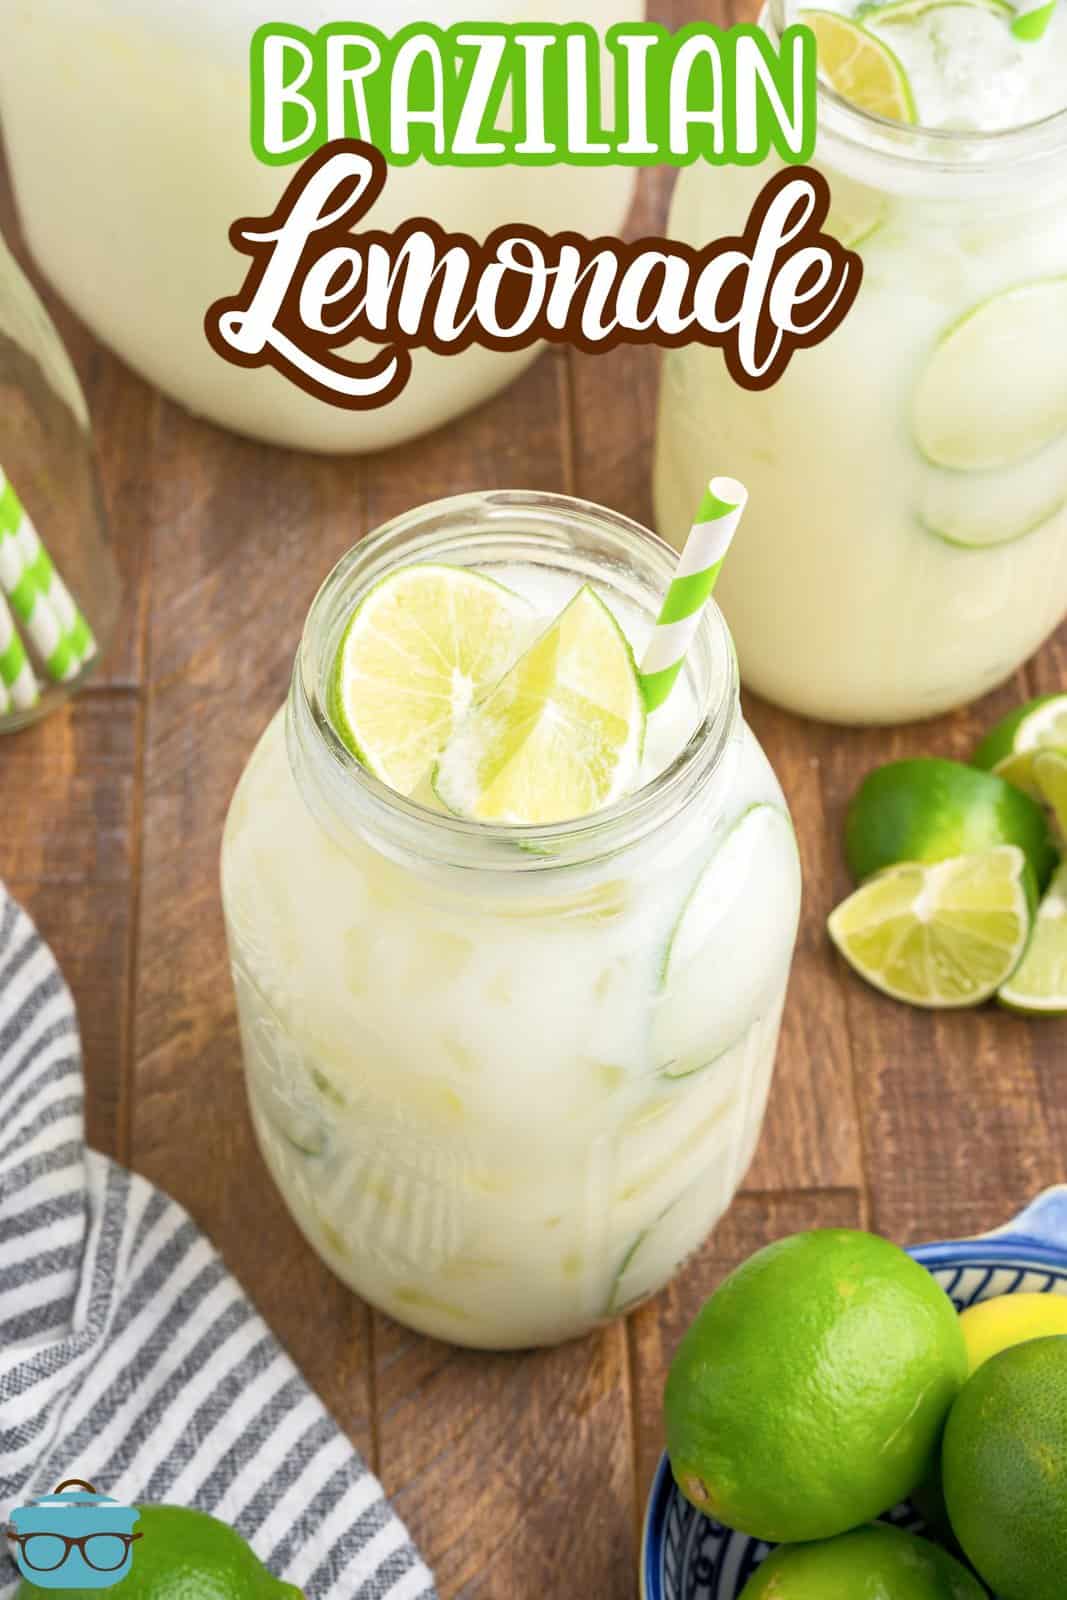 Looking down on a homemade fresh Brazilian Lemonade, limonada.